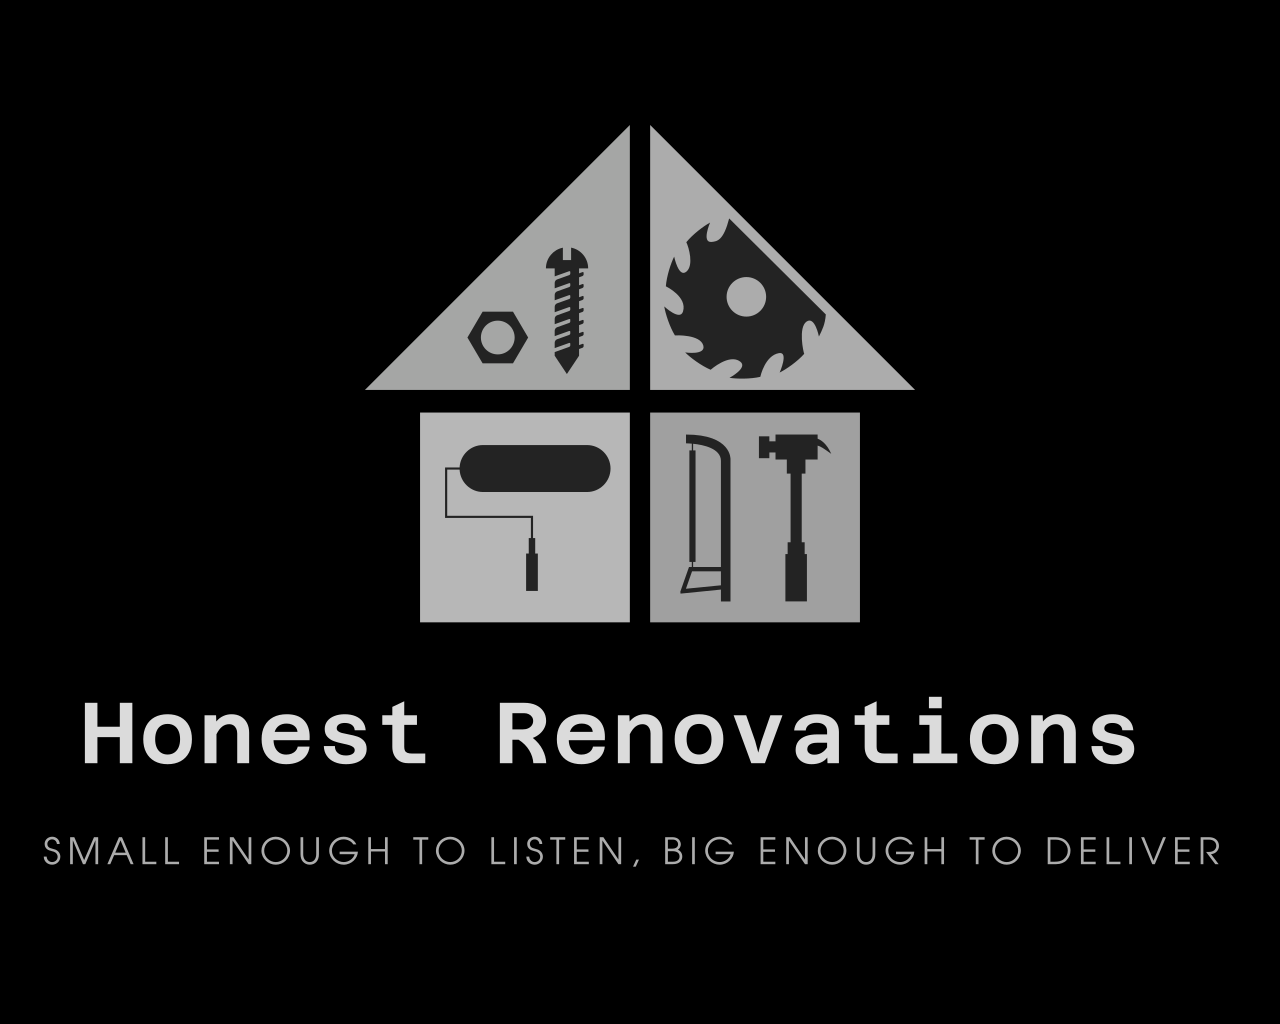 Honest Renovations website's web page